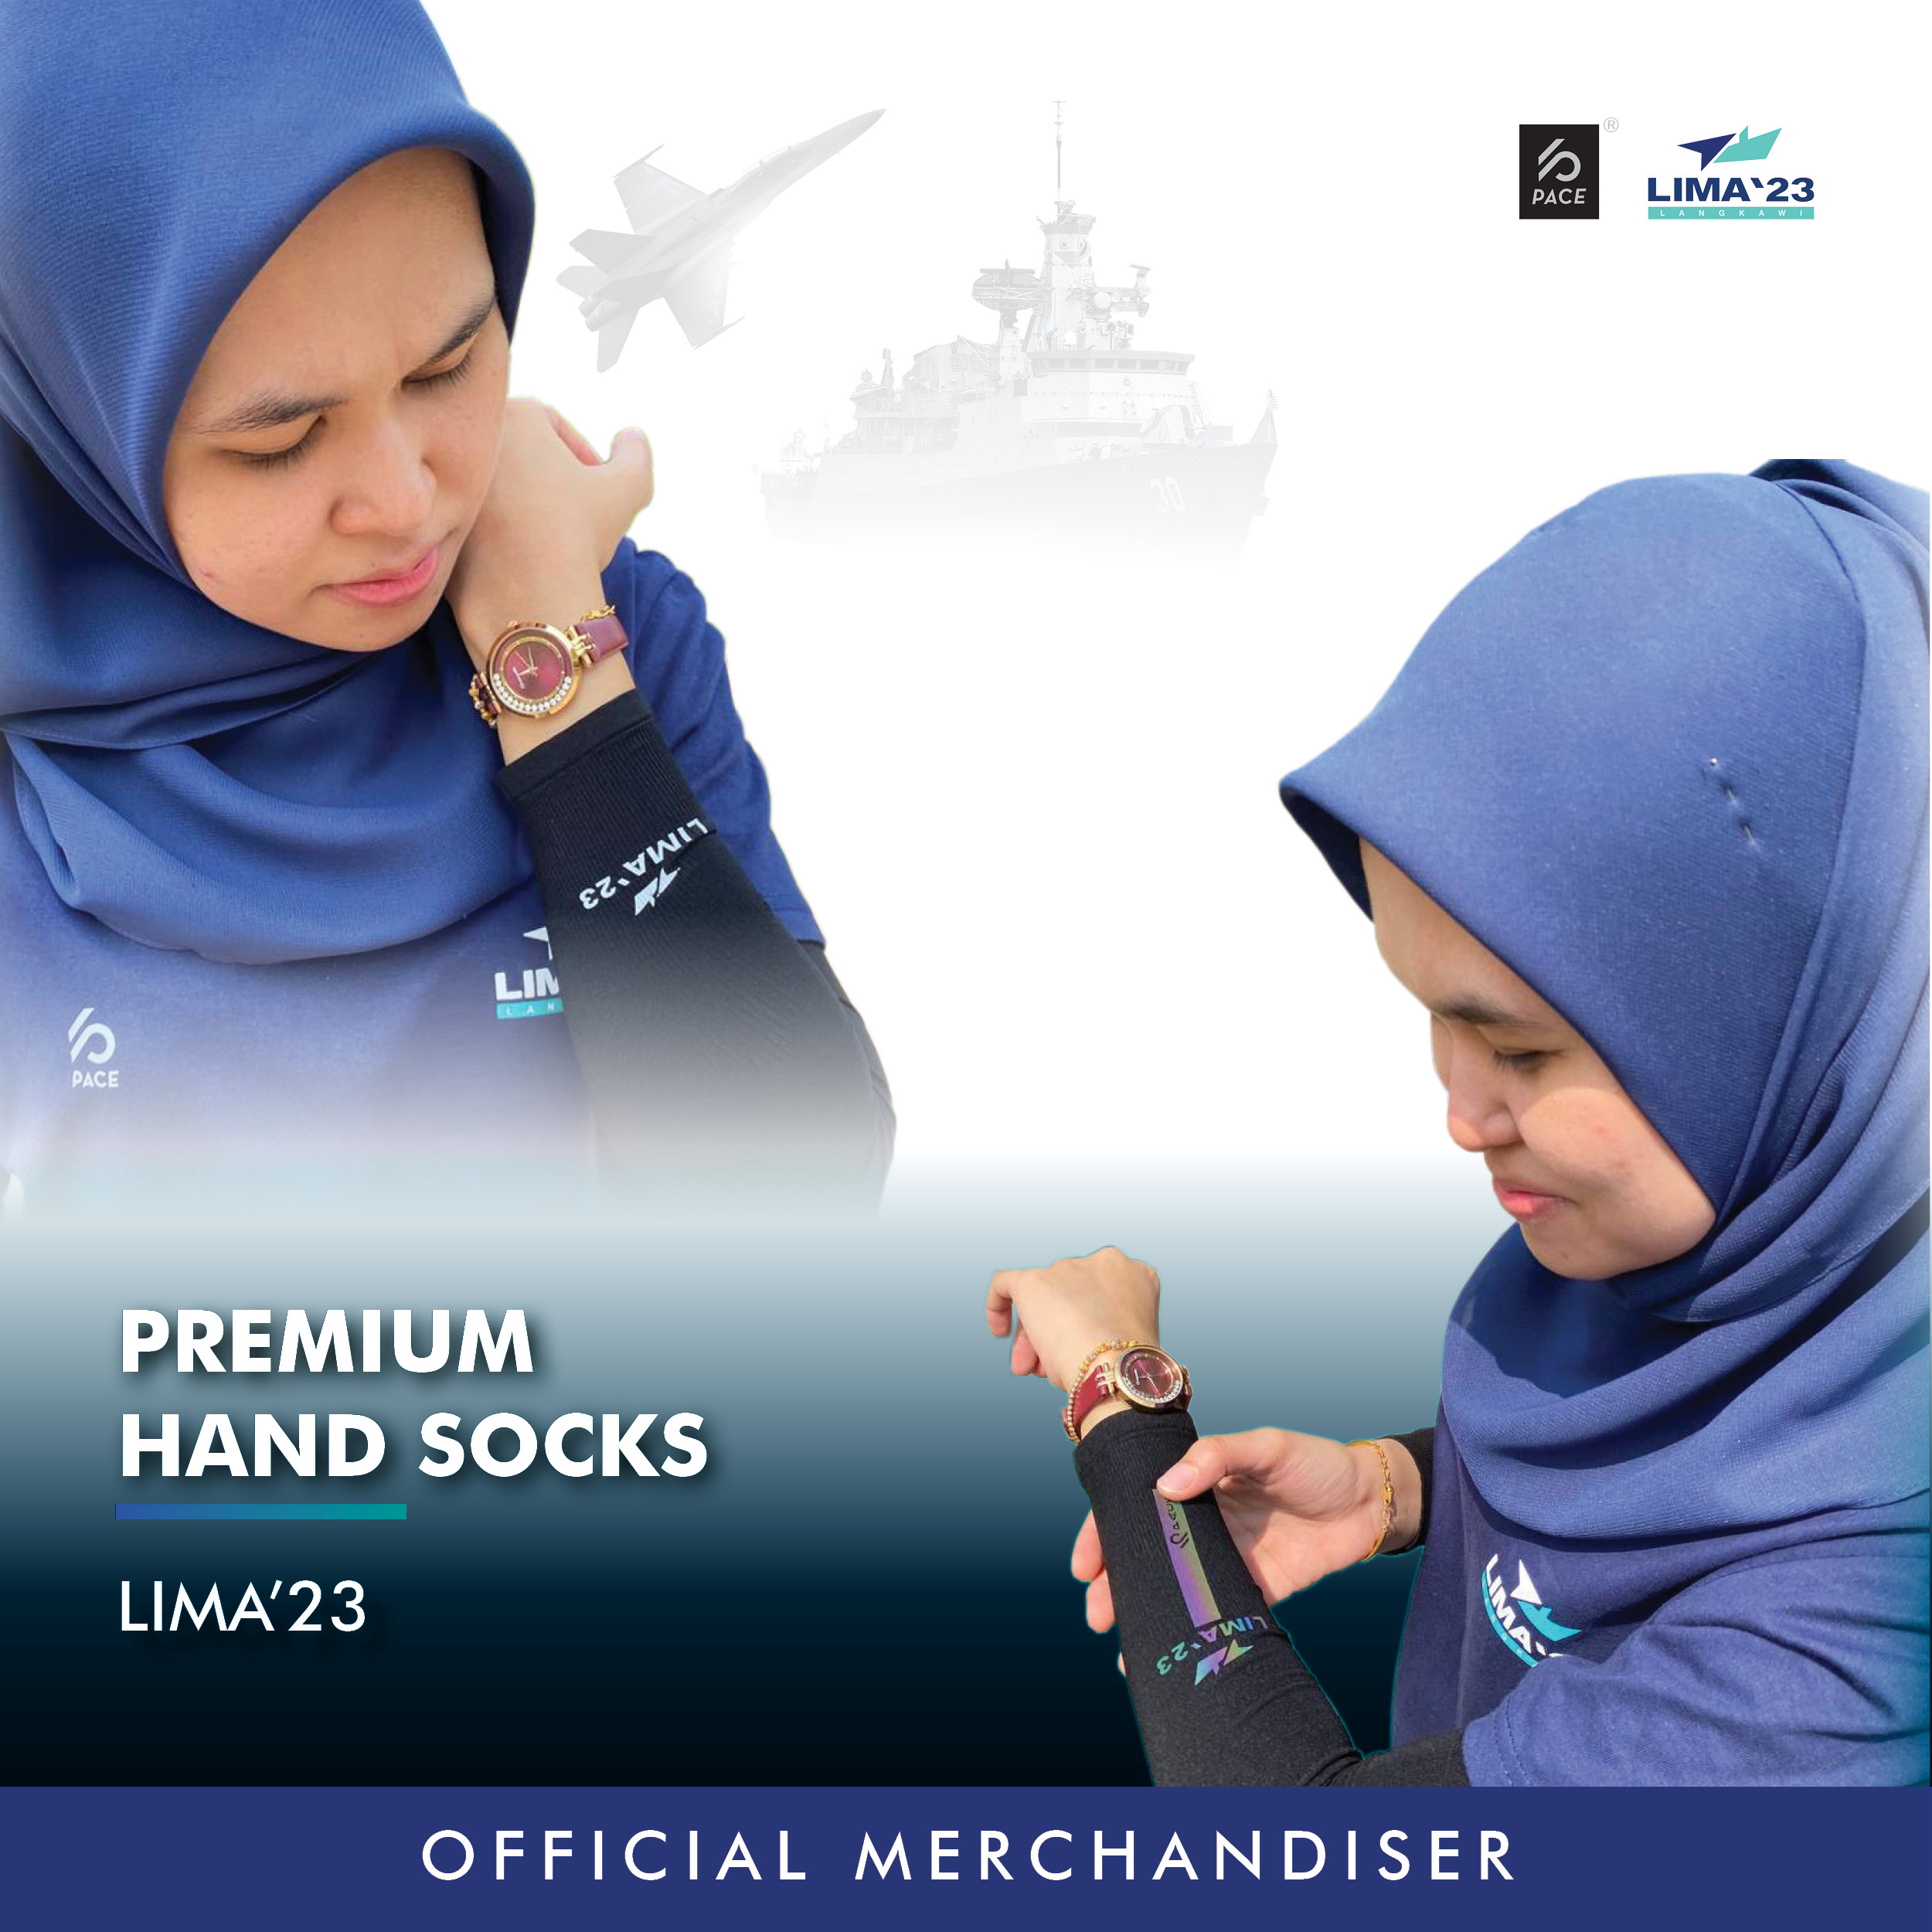 LIMA'23 Premium Hand Socks